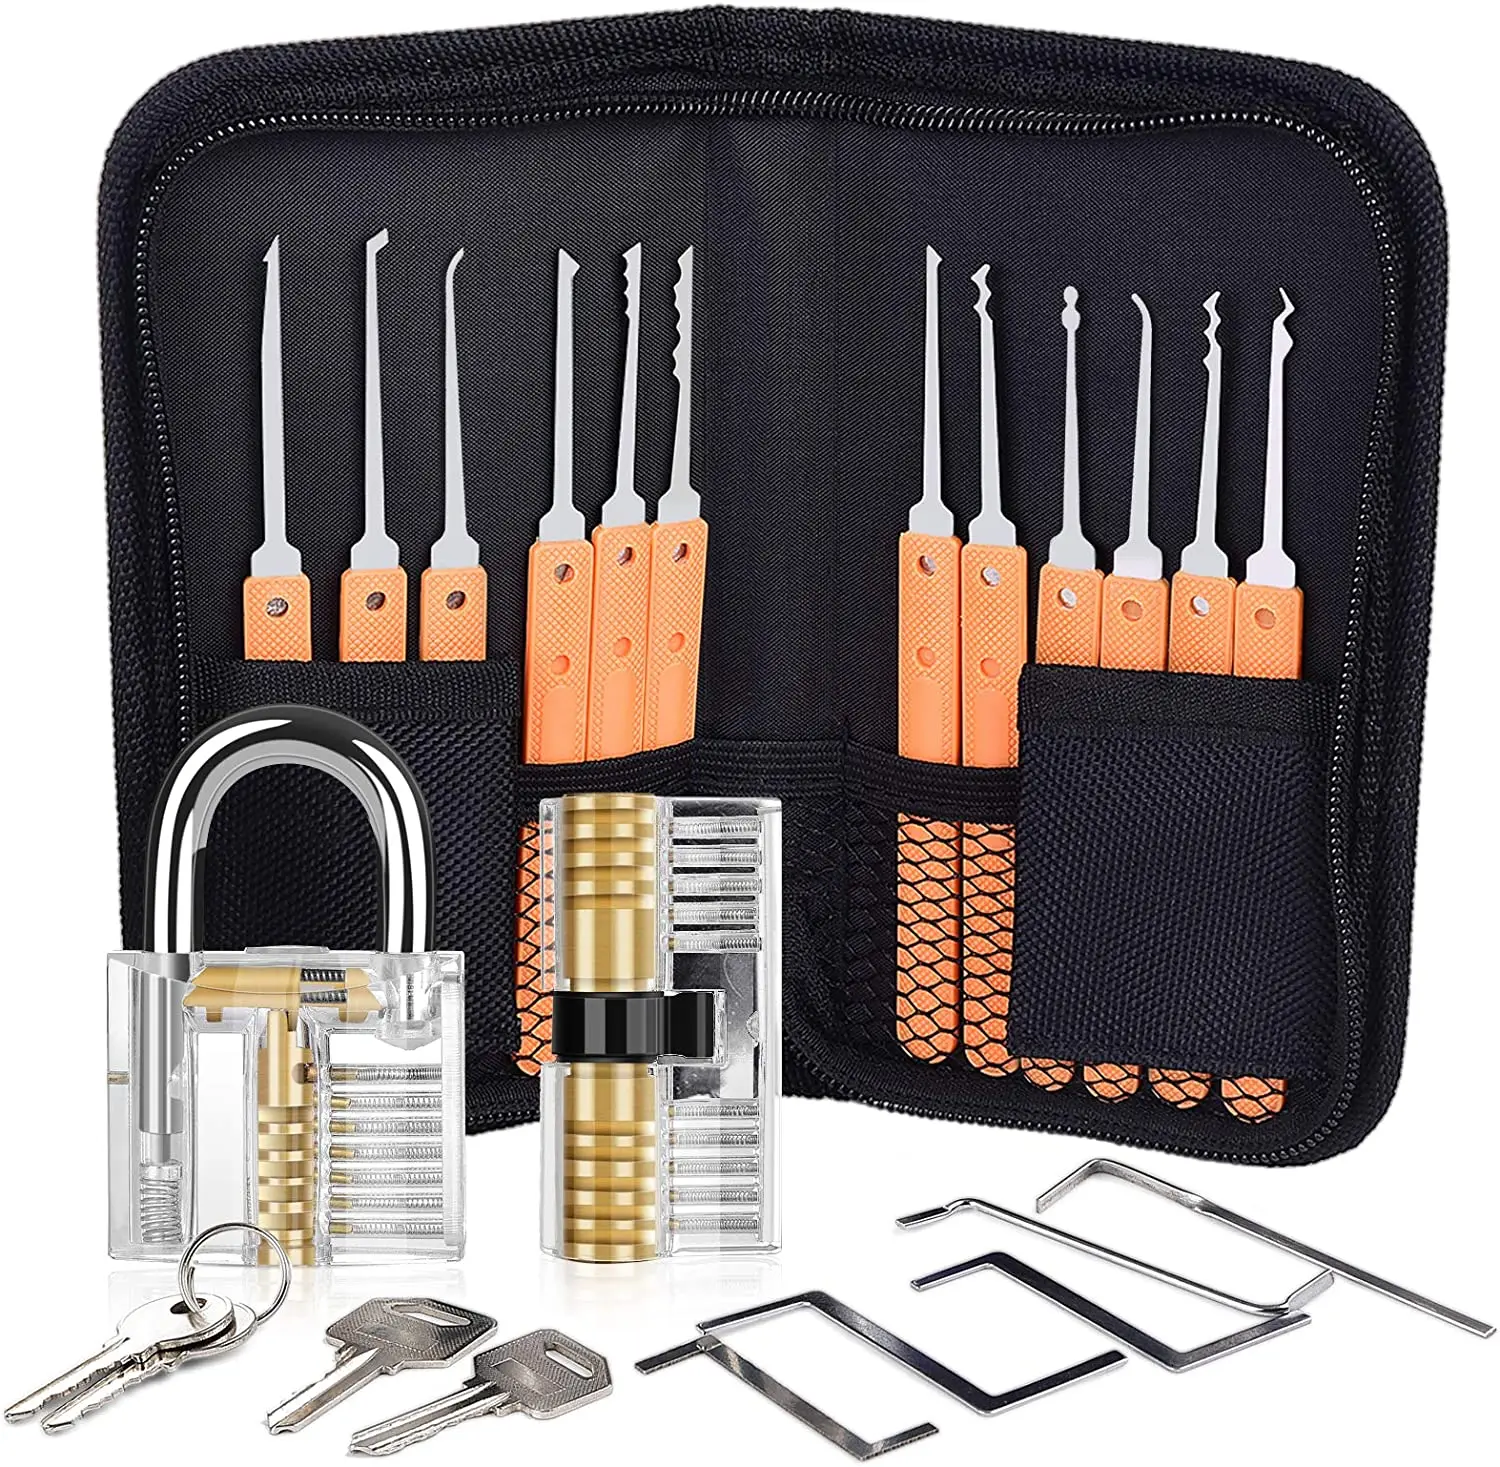 

Premium Practice Lock Picking Tools with 2 Transparent Training Padlock for Lockpicking,Beginner and Locksmith Training(Orange)